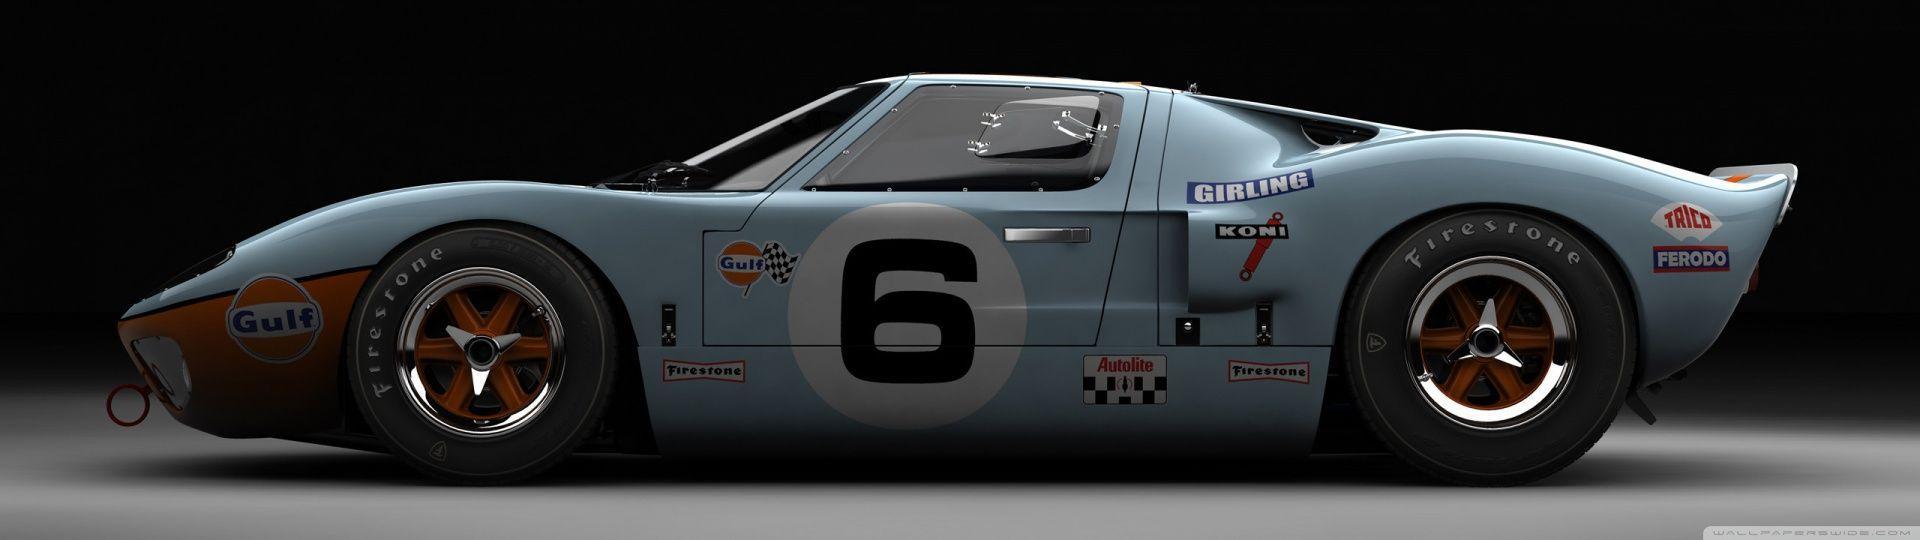 Ford GT40 Le Mans 1969 HD desktop wallpaper, High Definition